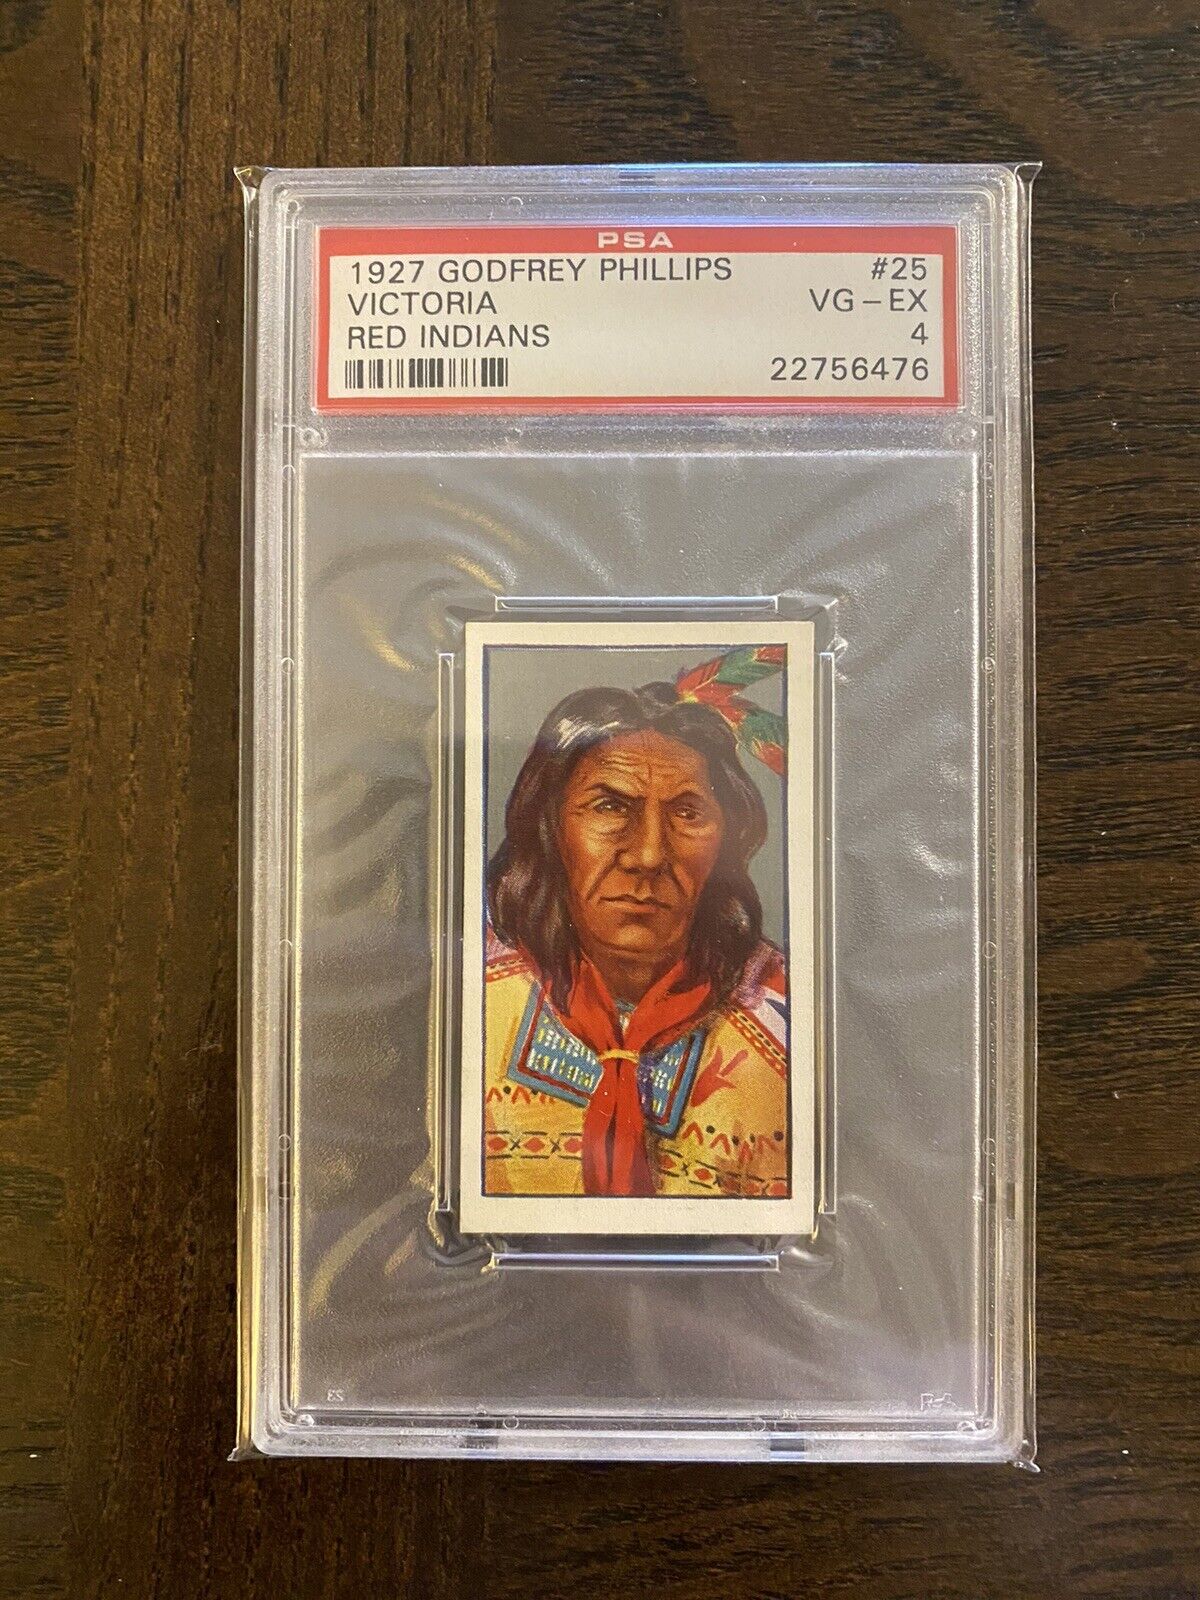 1927 Godfrey Phillips Victoria Red Indians Psa 4 